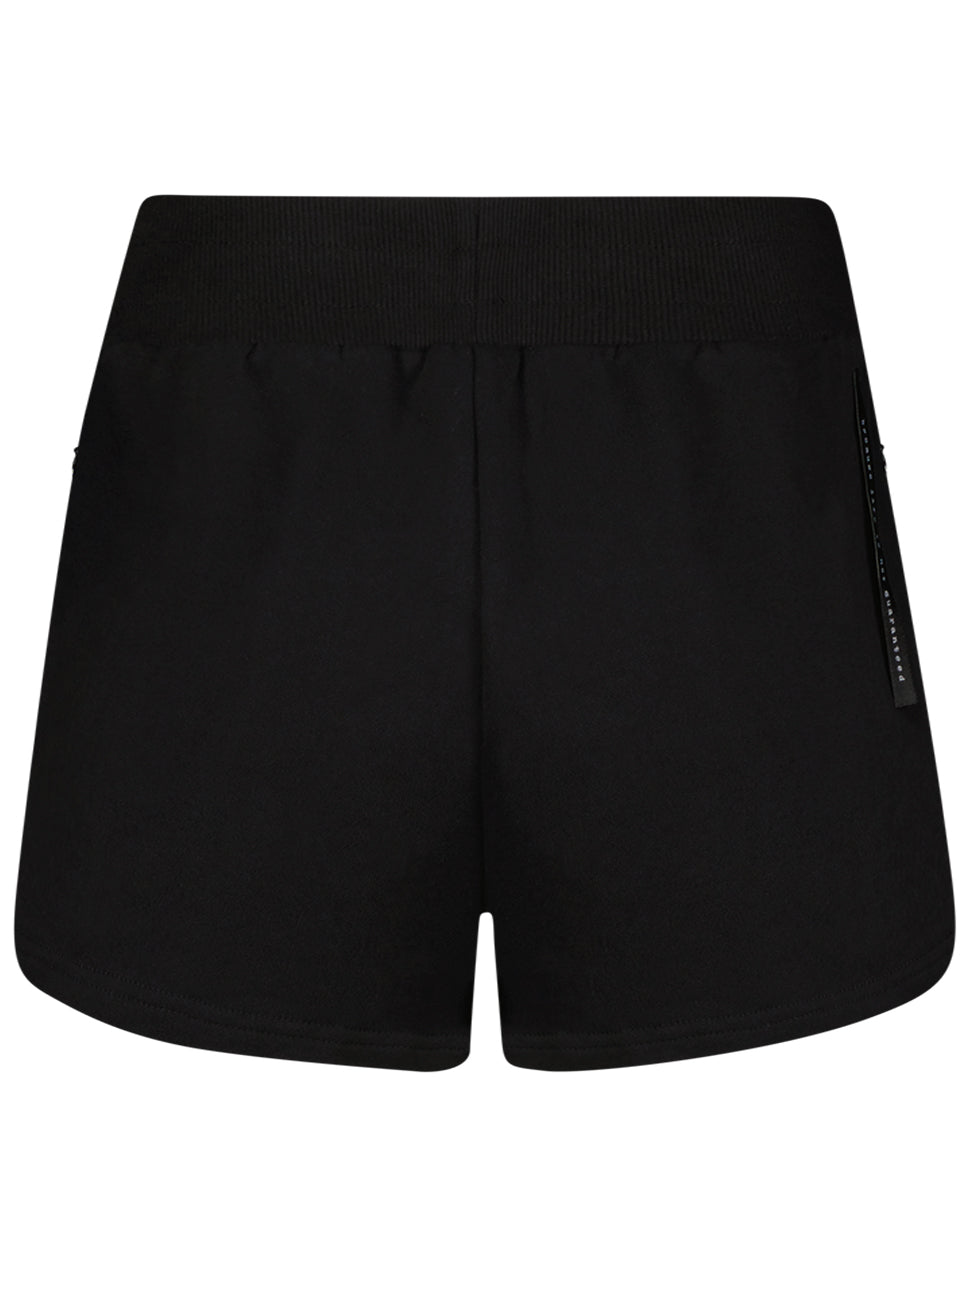 Bling Knit Shorts Black BLW08BC KBS01